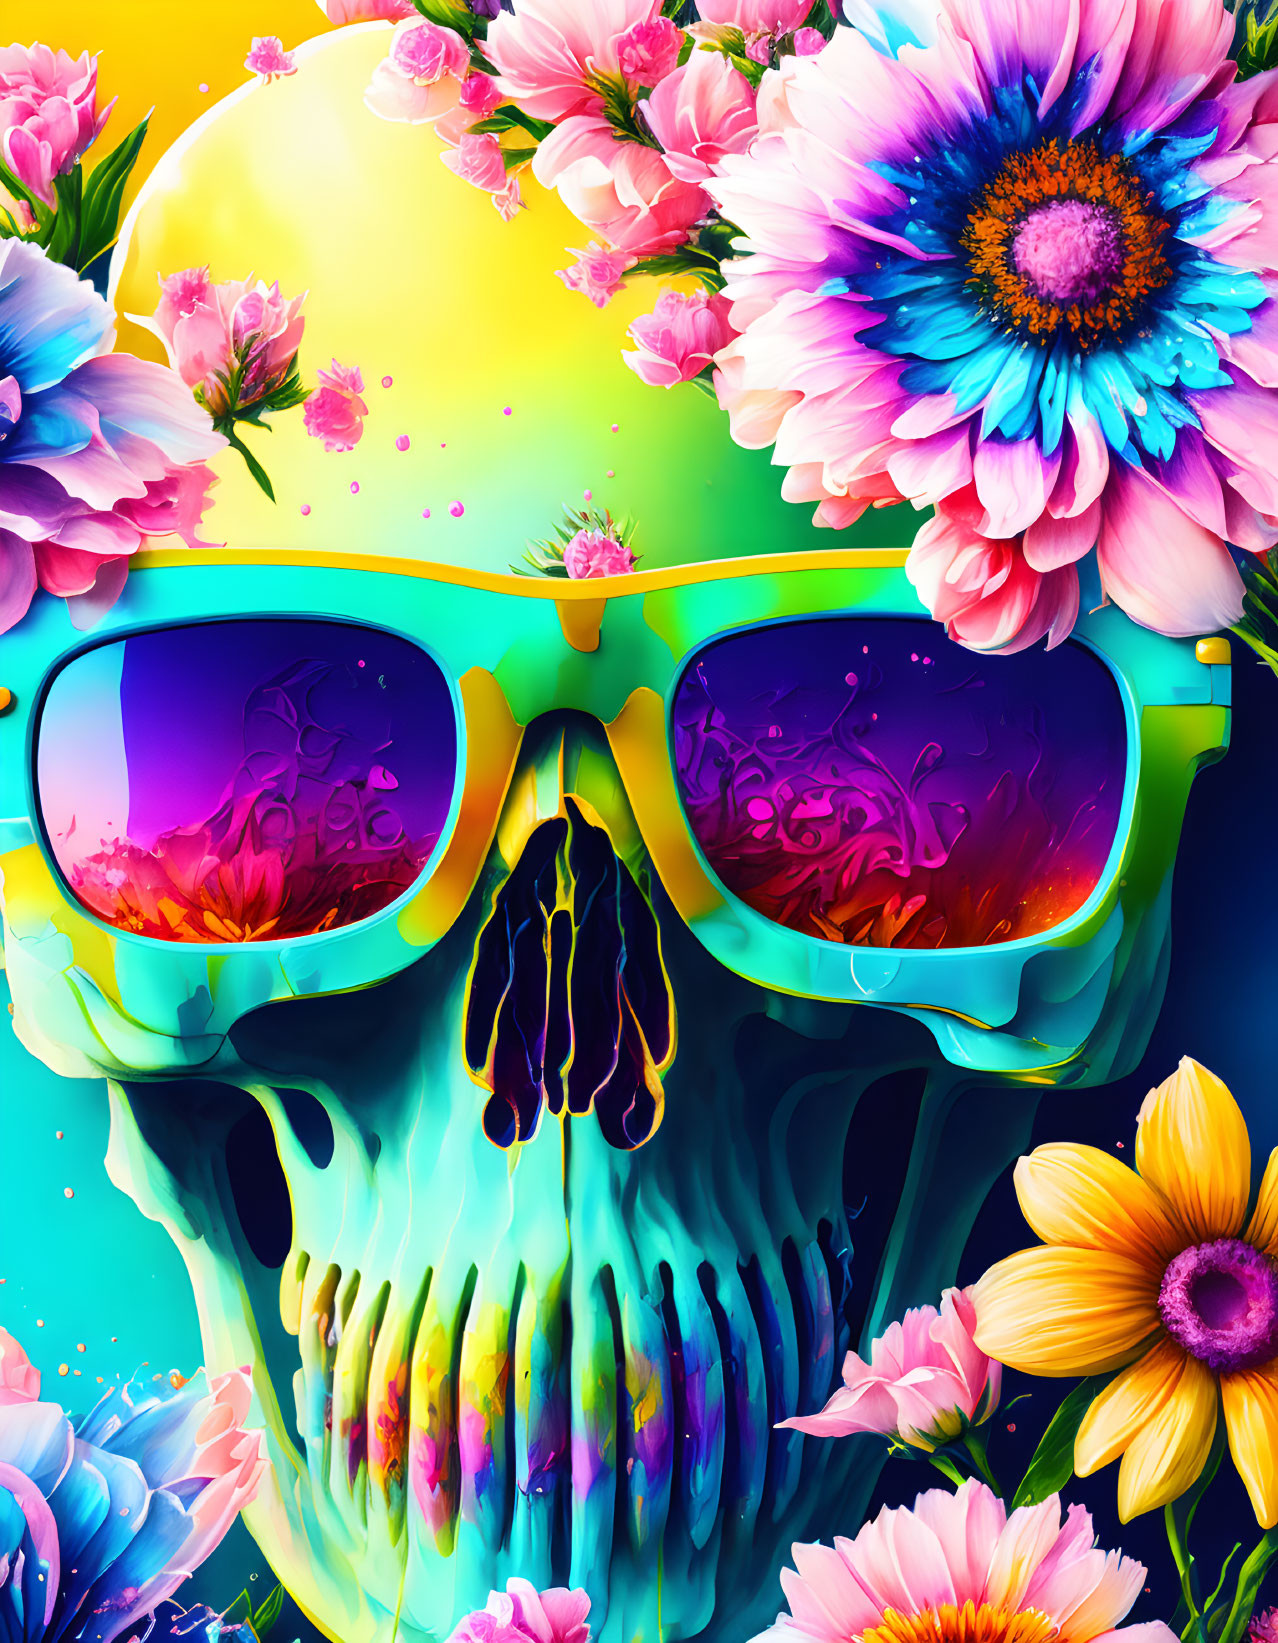 Dead Skull wearing trendy sunglasses